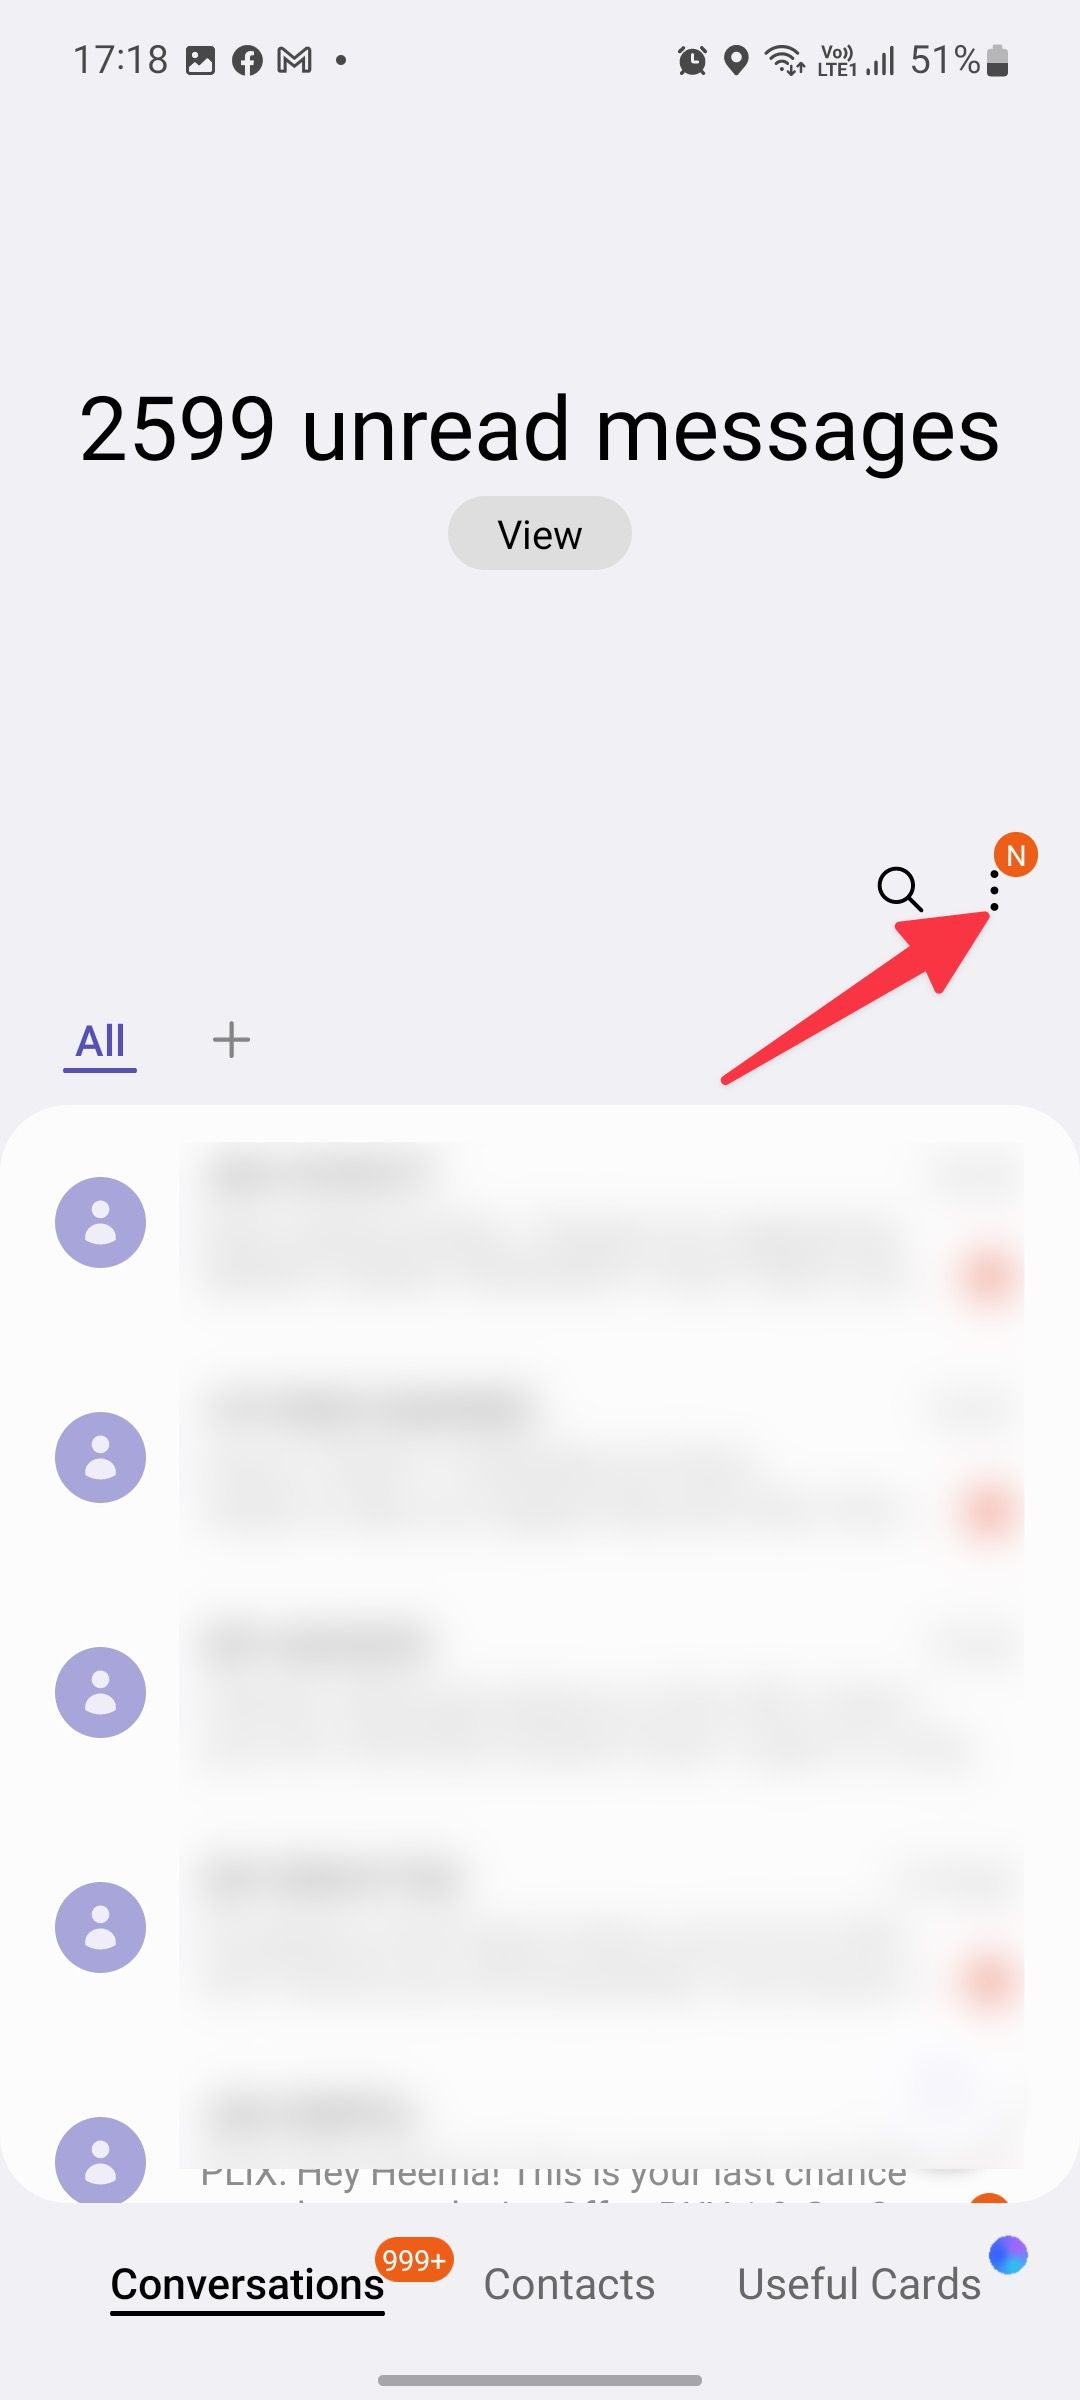 open more menu in messages app